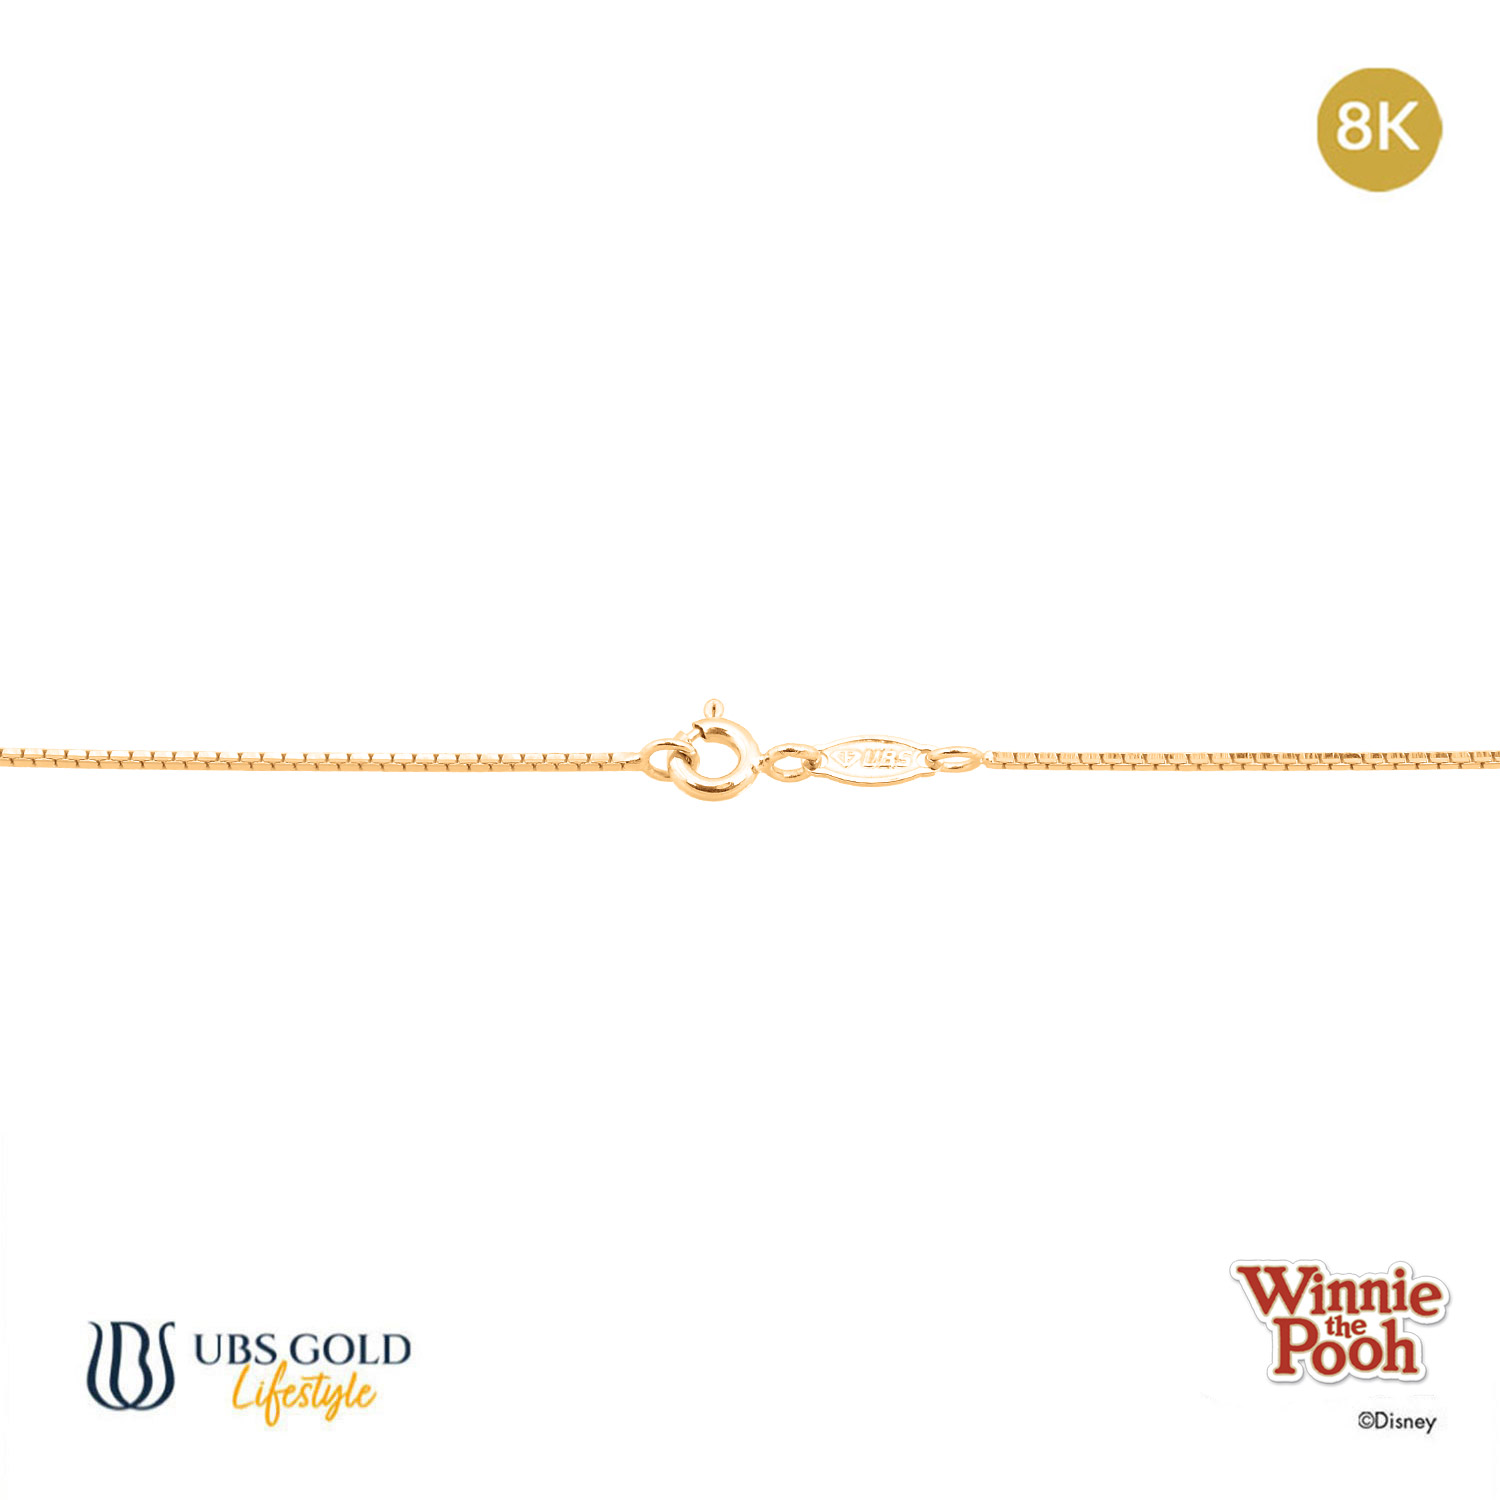 UBS Gold Kalung Emas Anak Disney Winnie The Pooh - Kky0288K - 8K